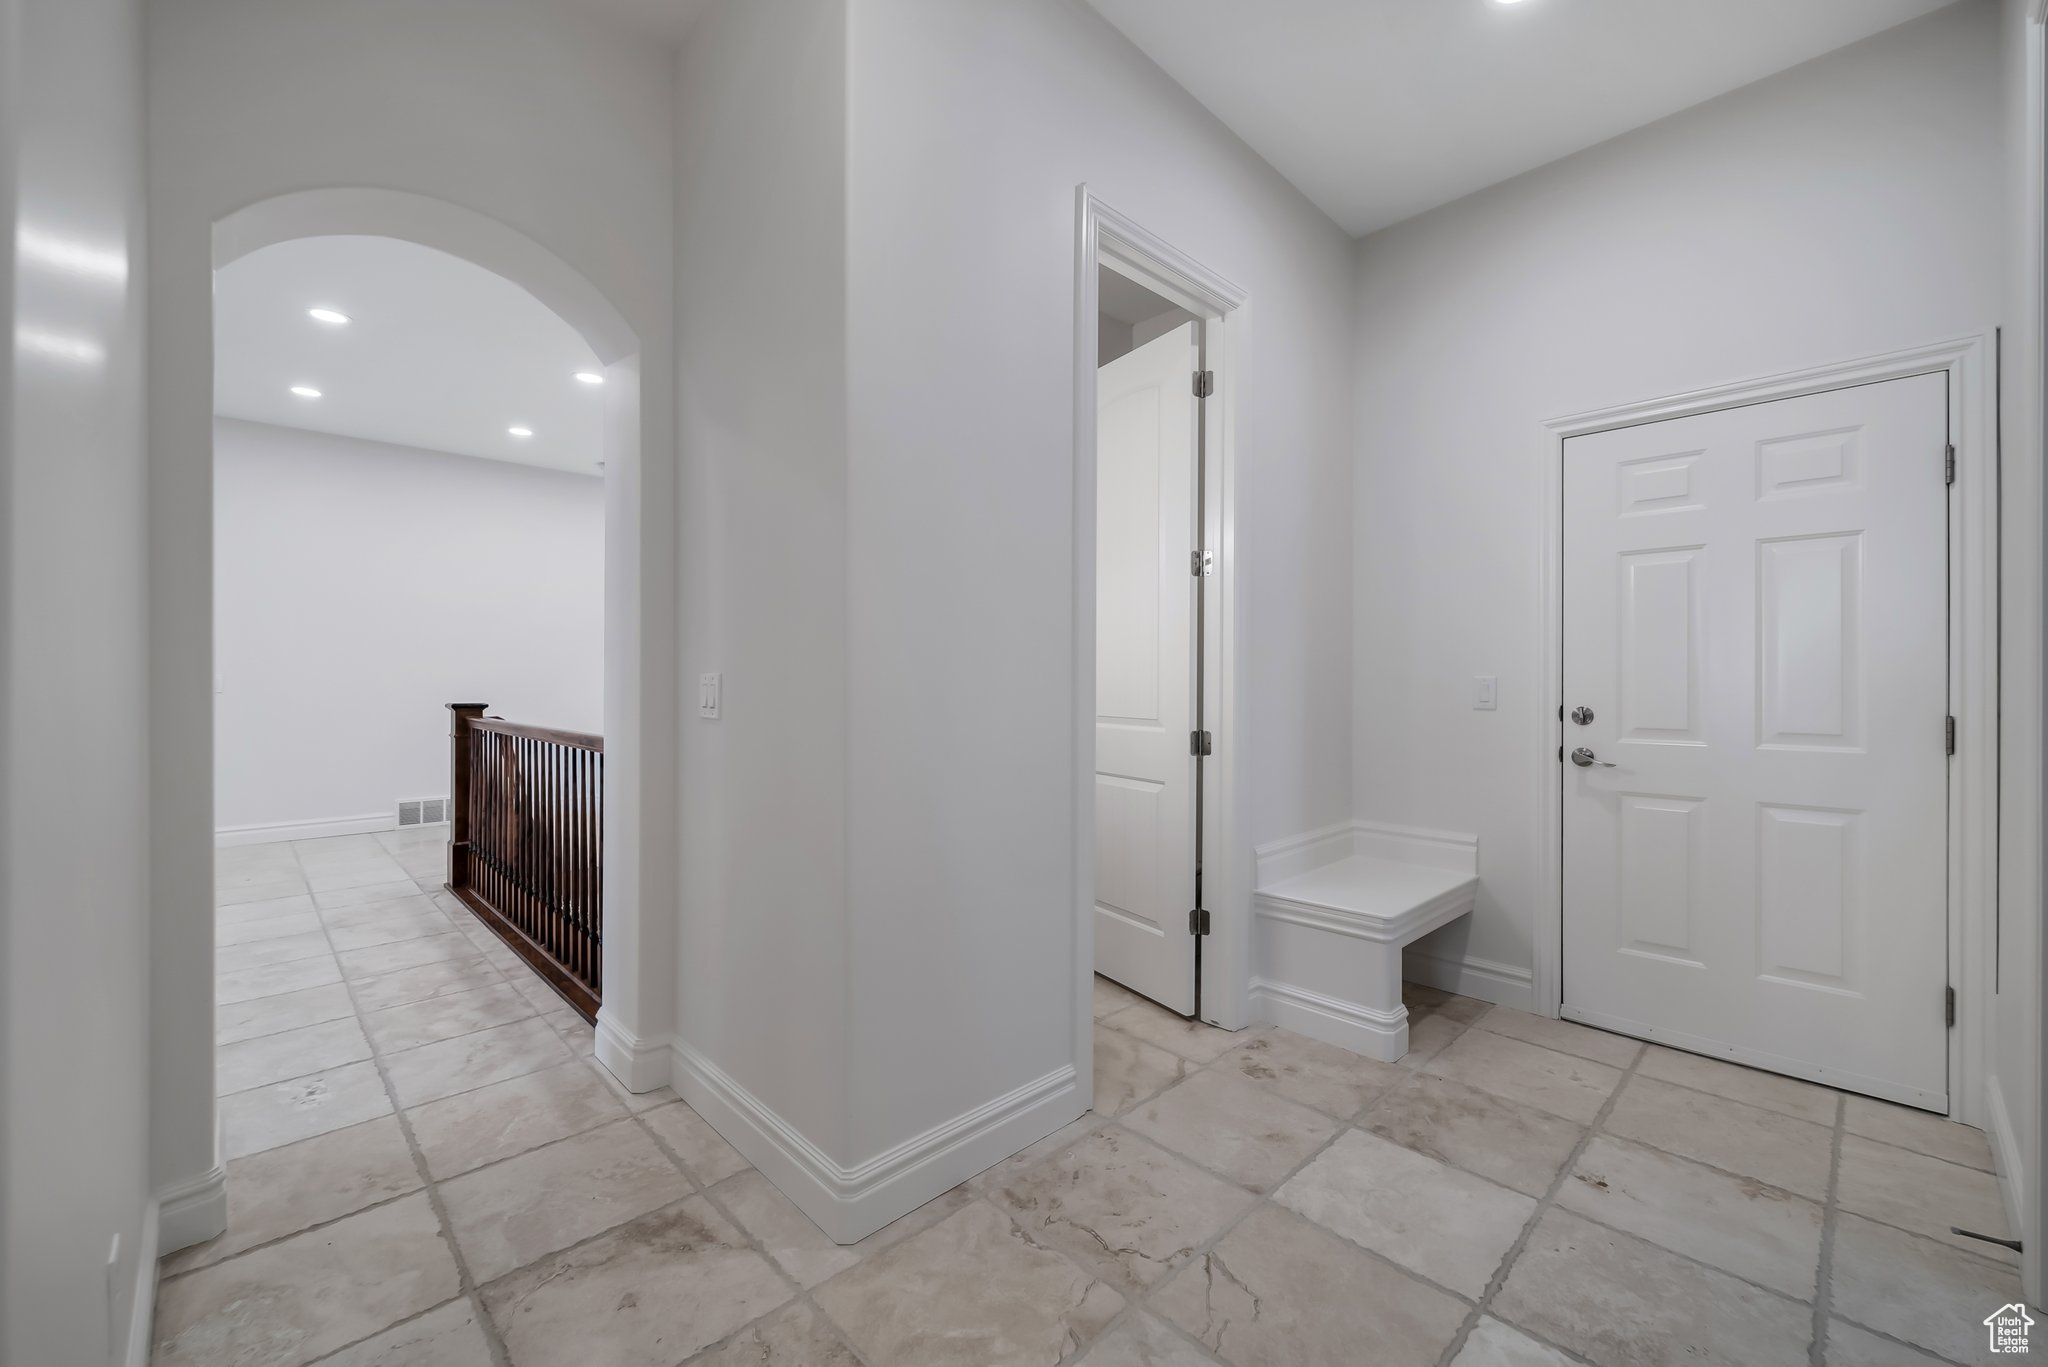 Bathroom featuring tile floors